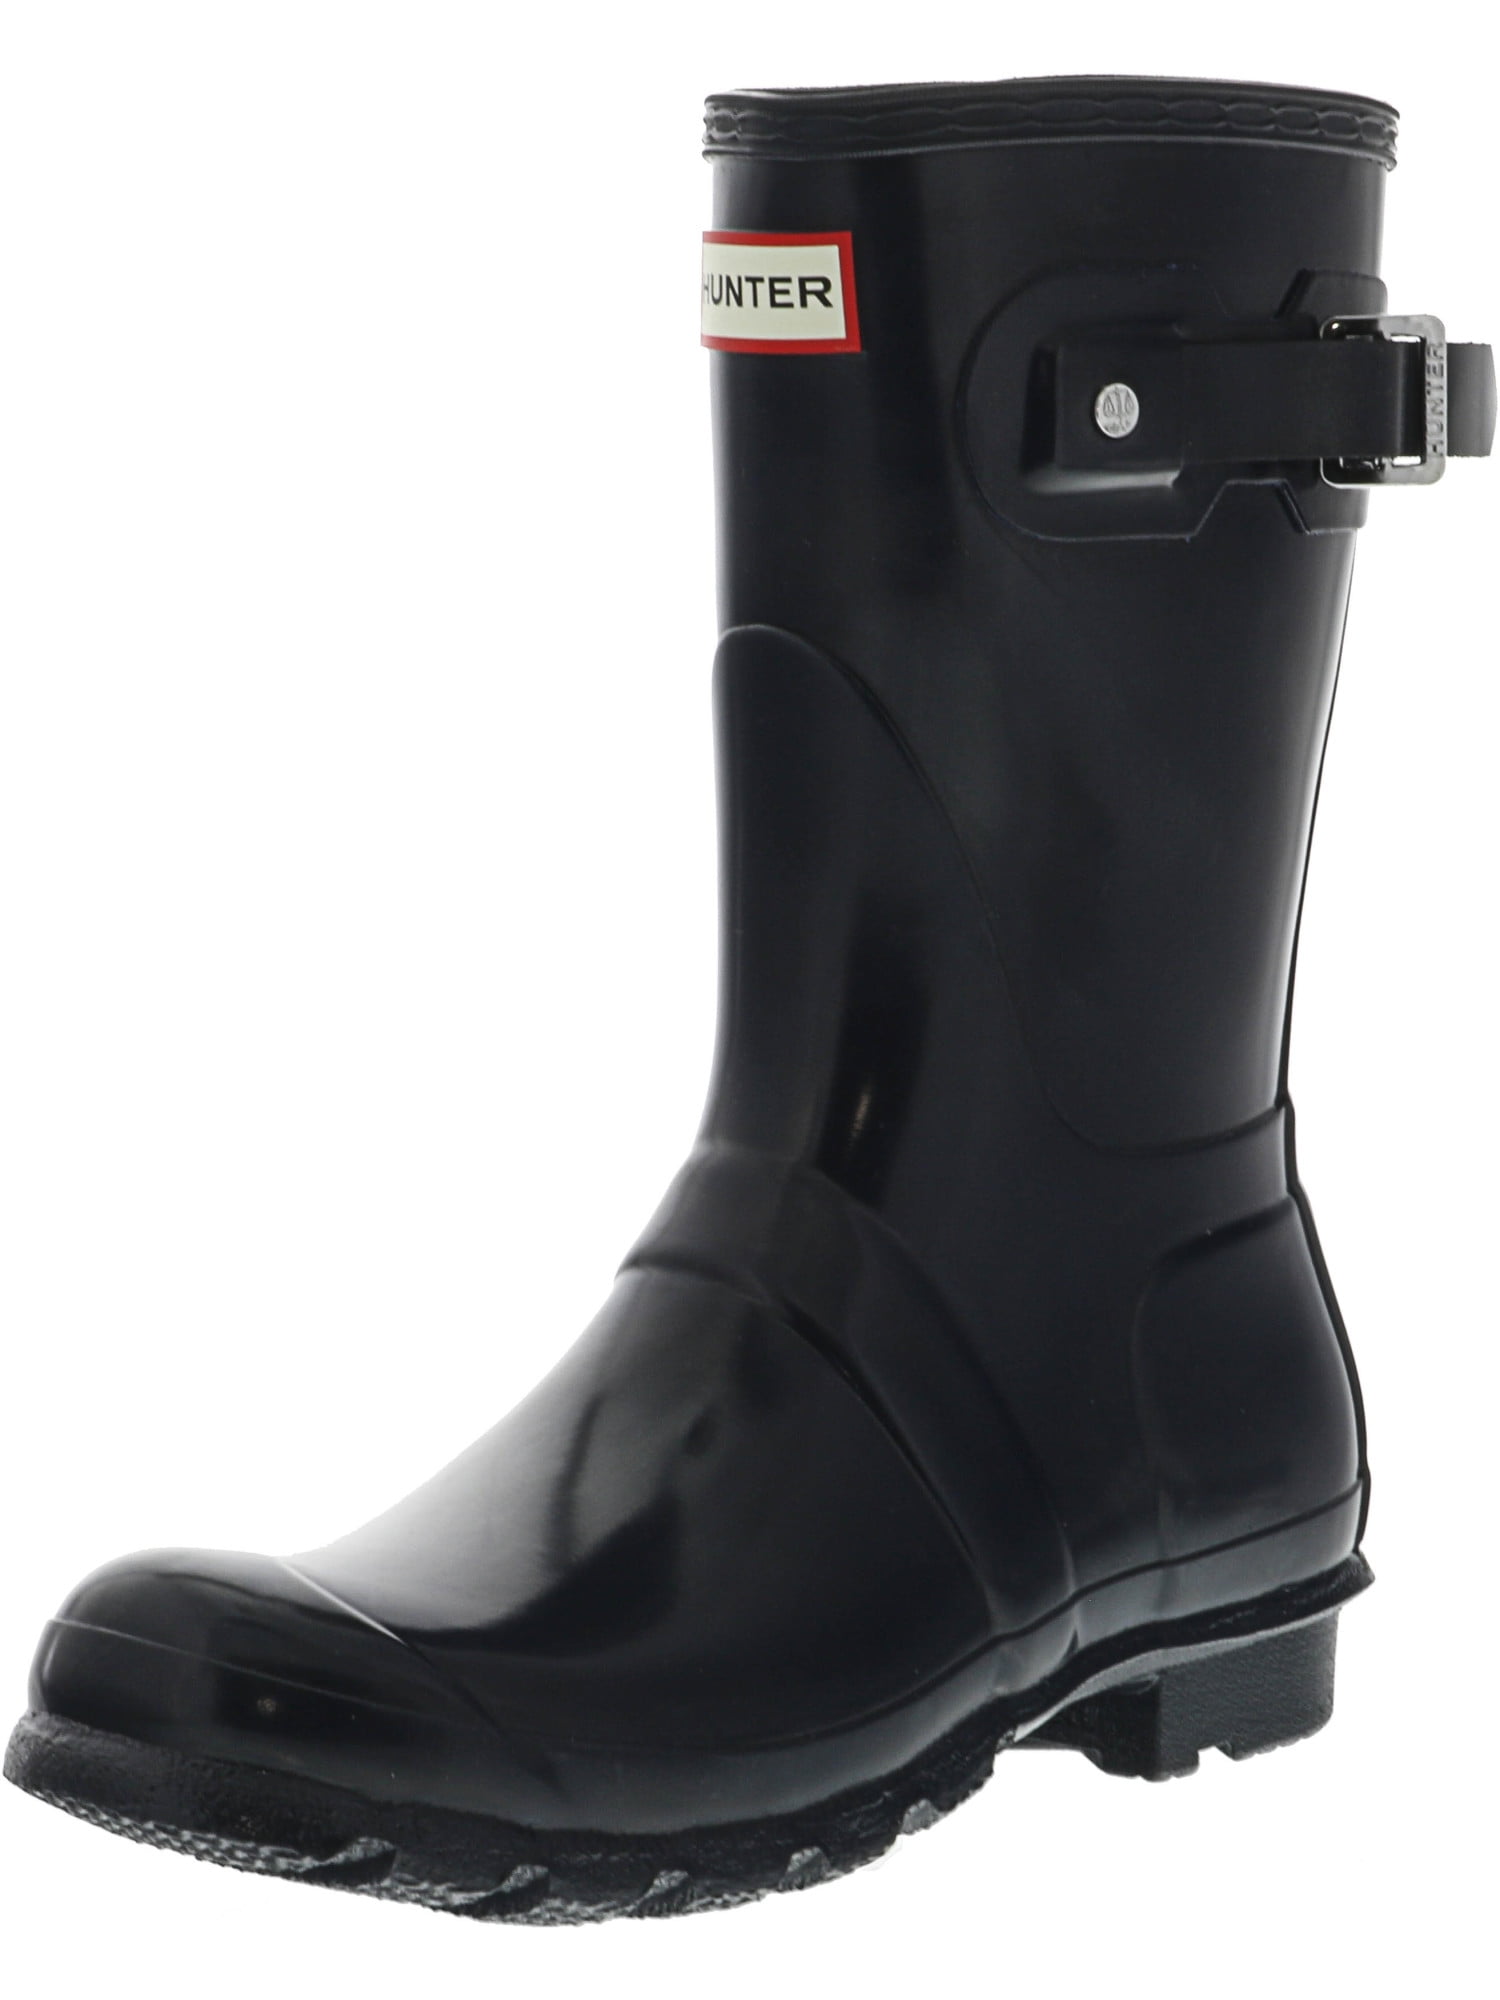 Buy > womens short rain boot > in stock